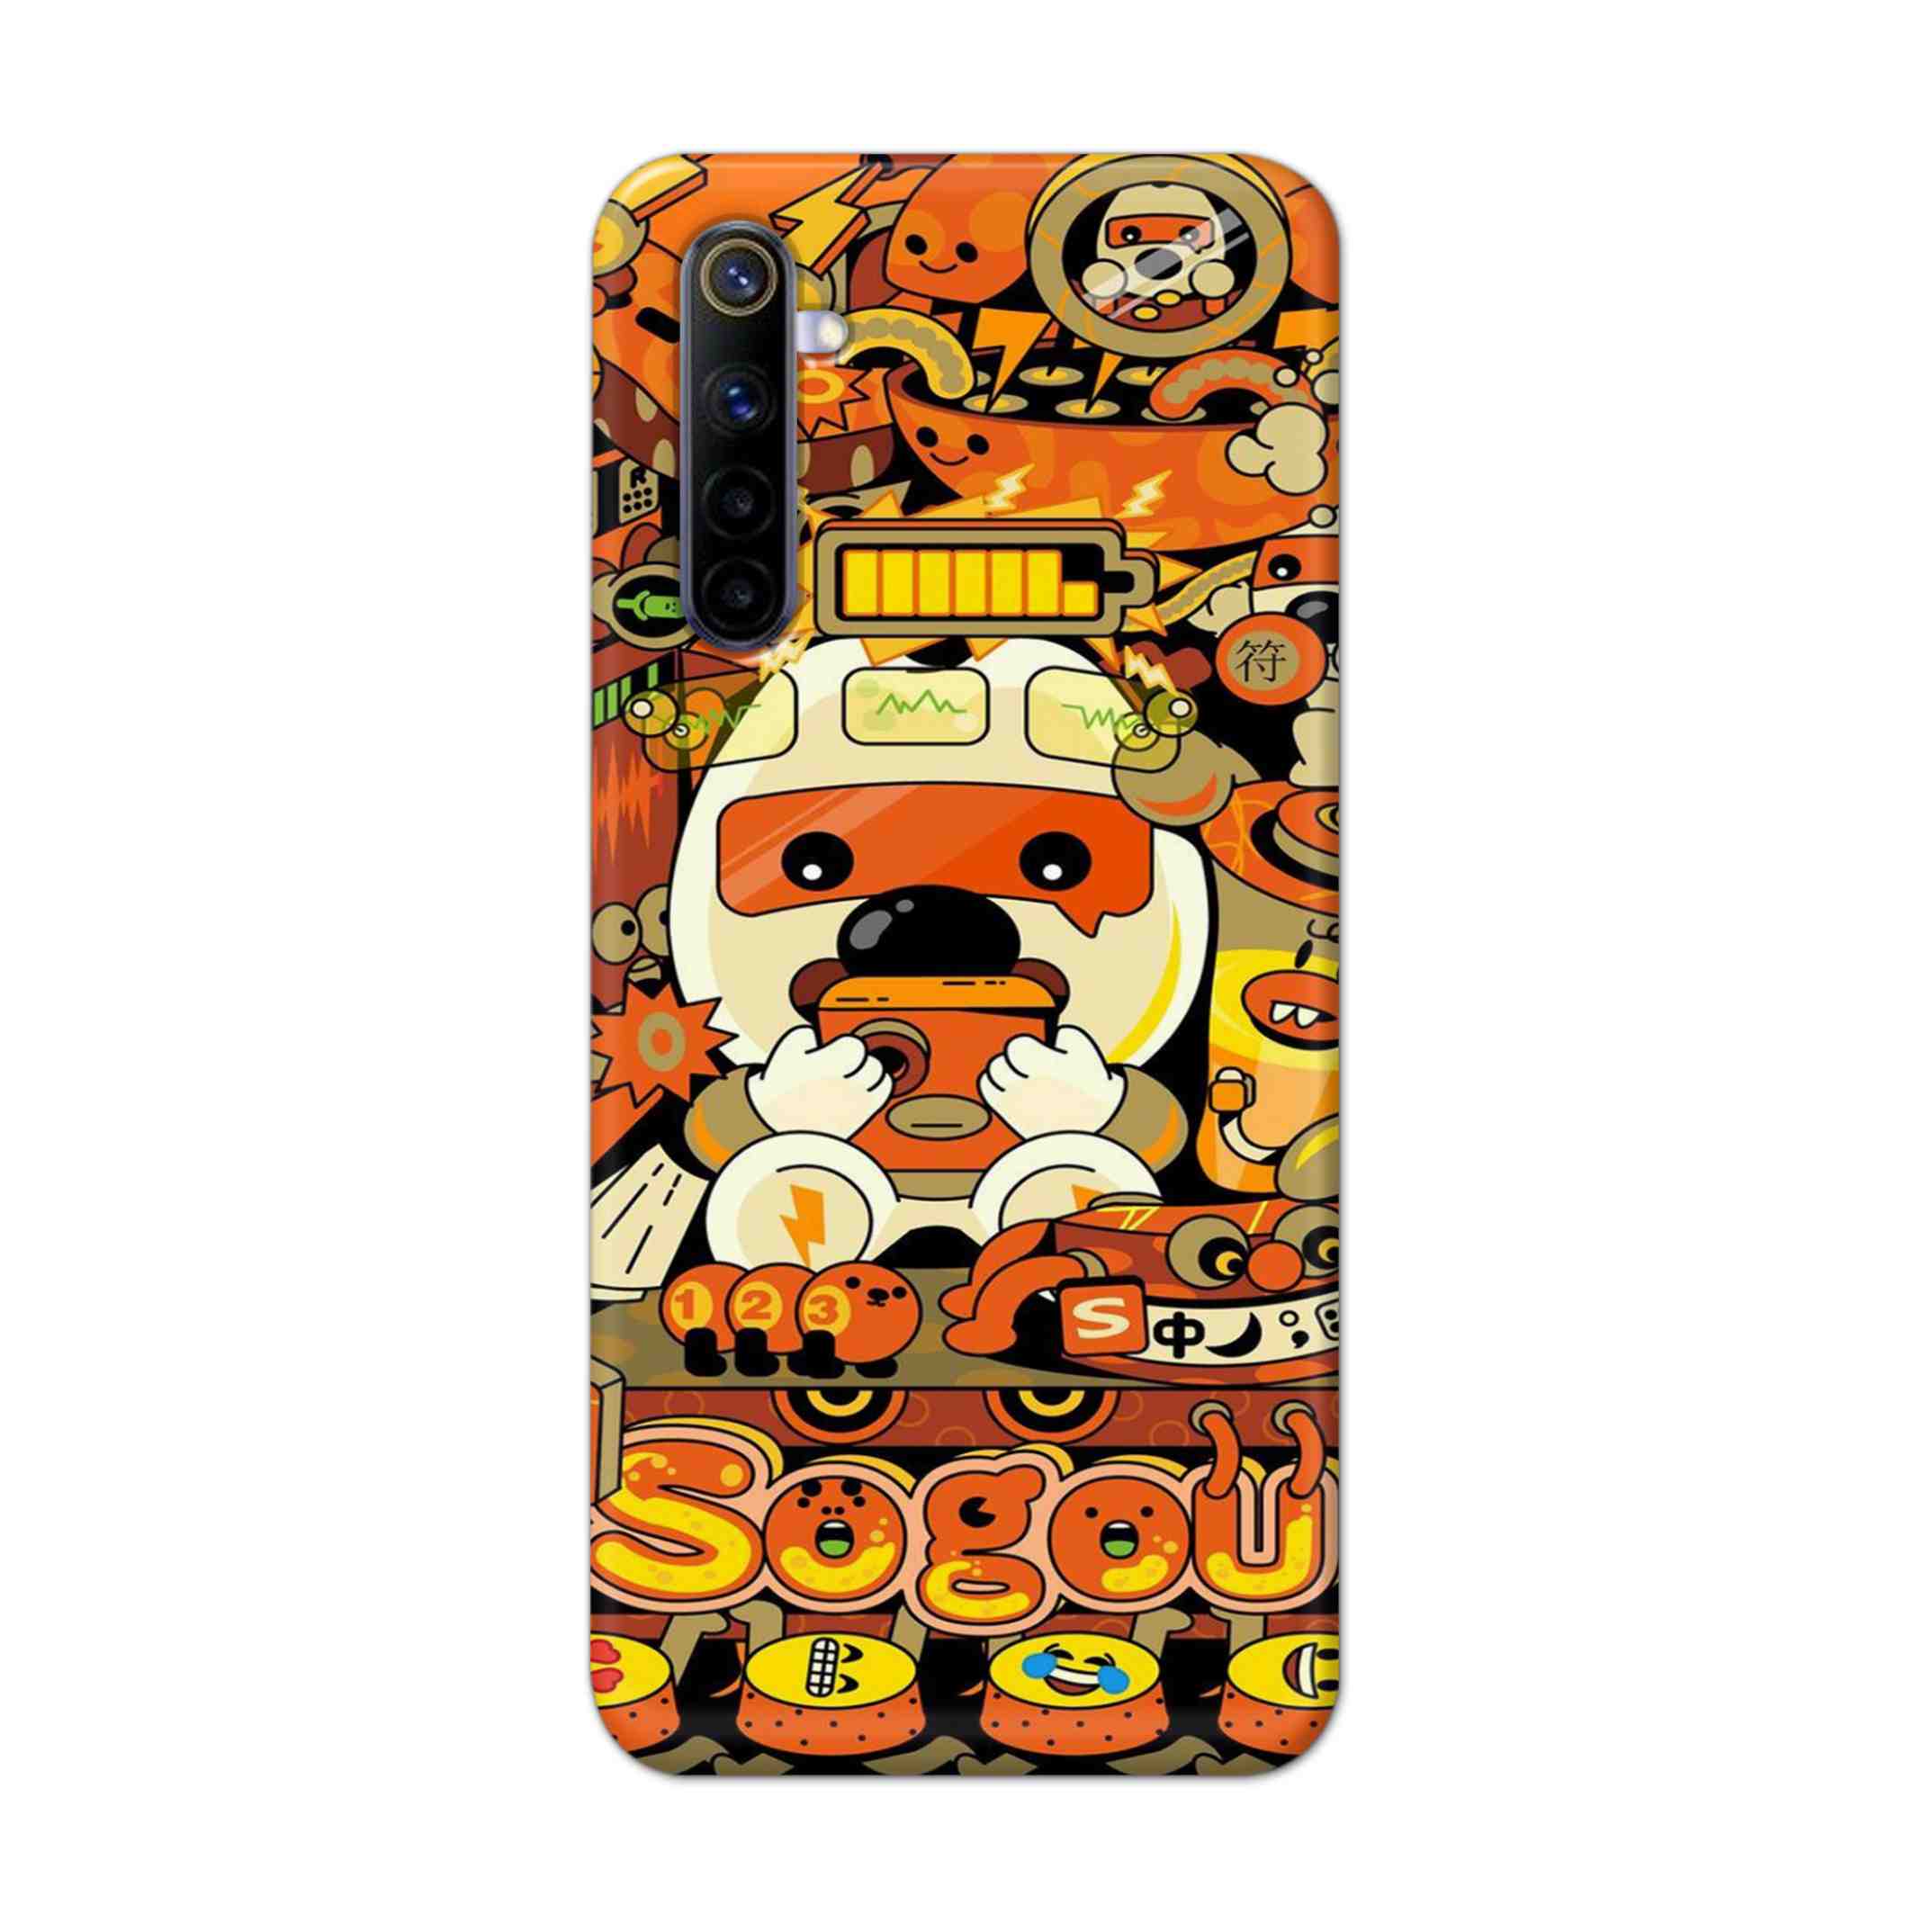 Buy Sogou Hard Back Mobile Phone Case Cover For REALME 6 Online